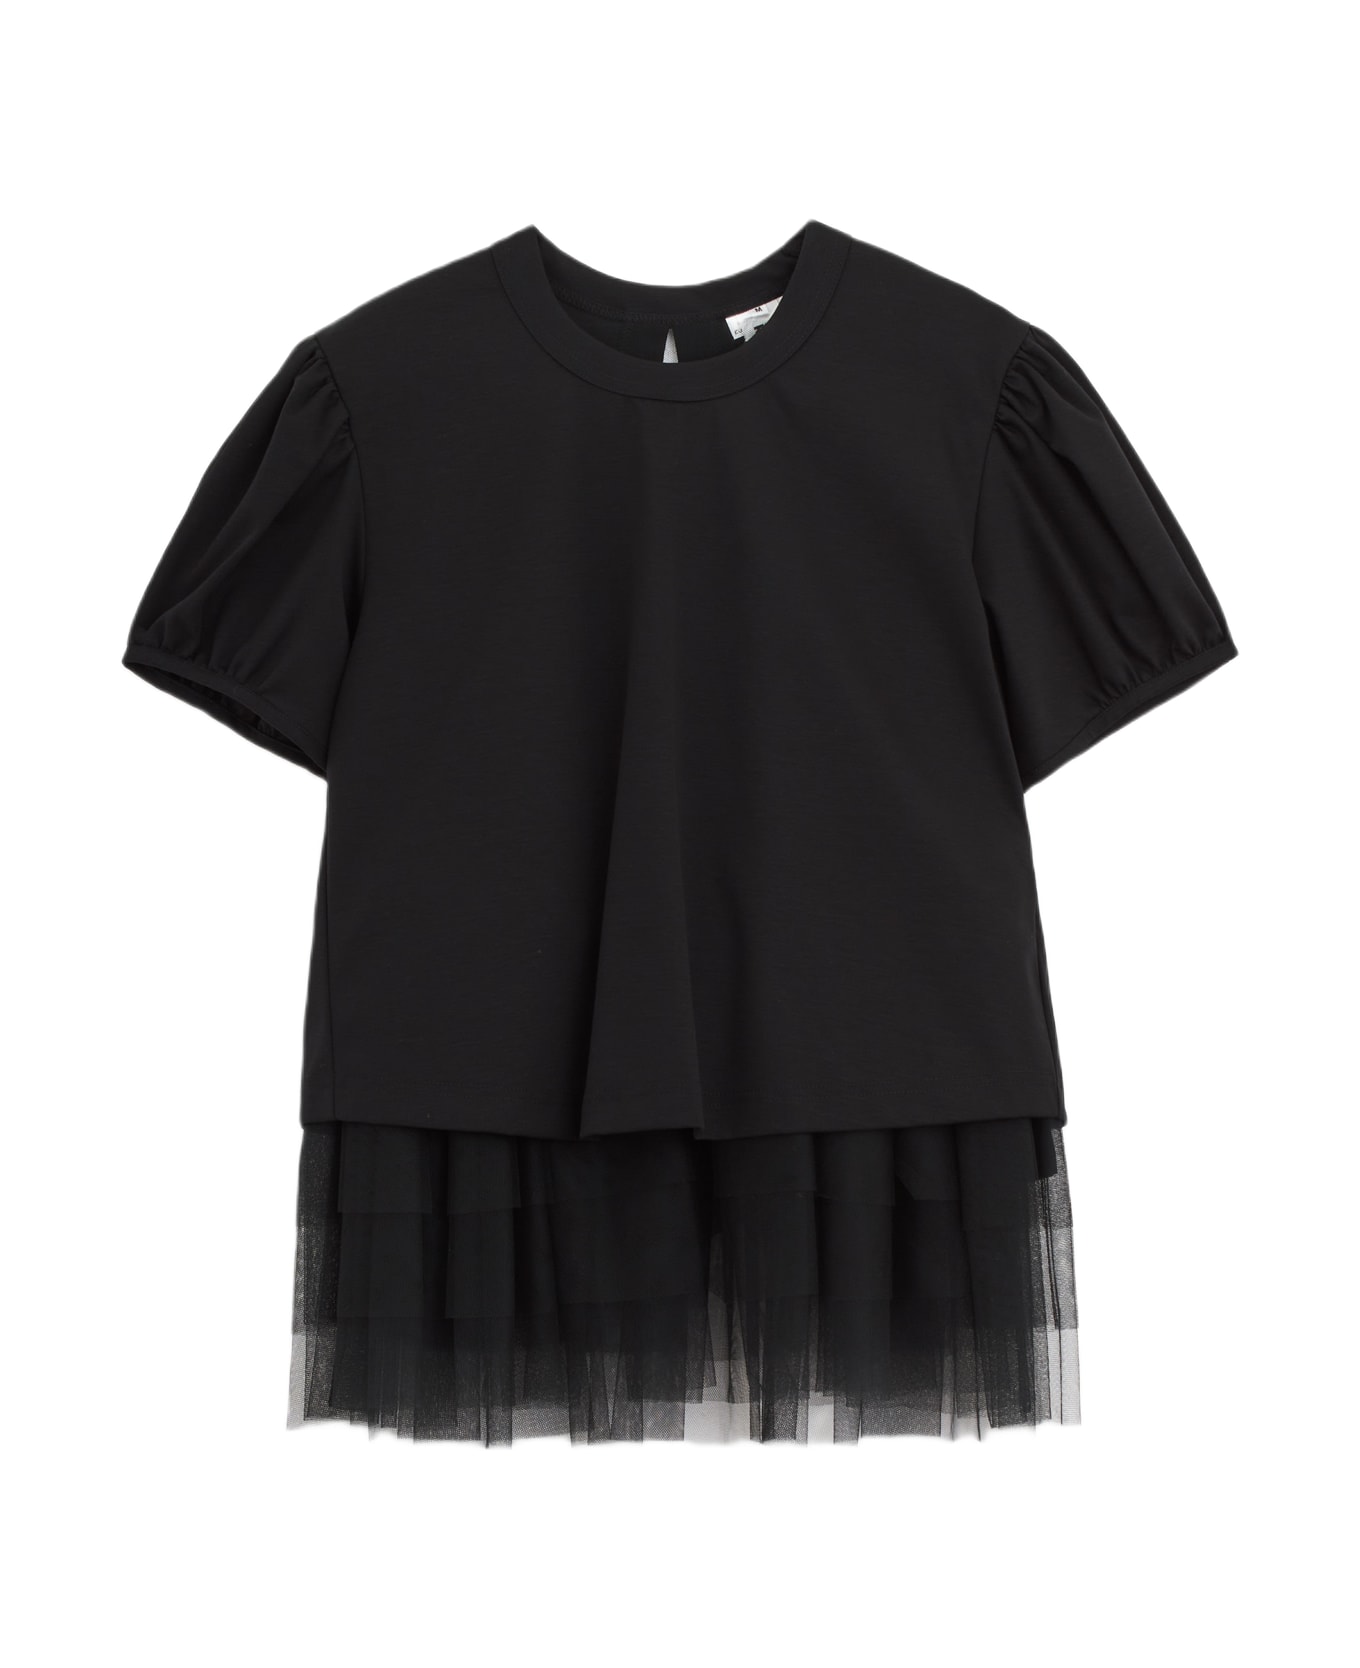 Comme des Garçons Noir Kei Ninomiya T-shirt - black Tシャツ